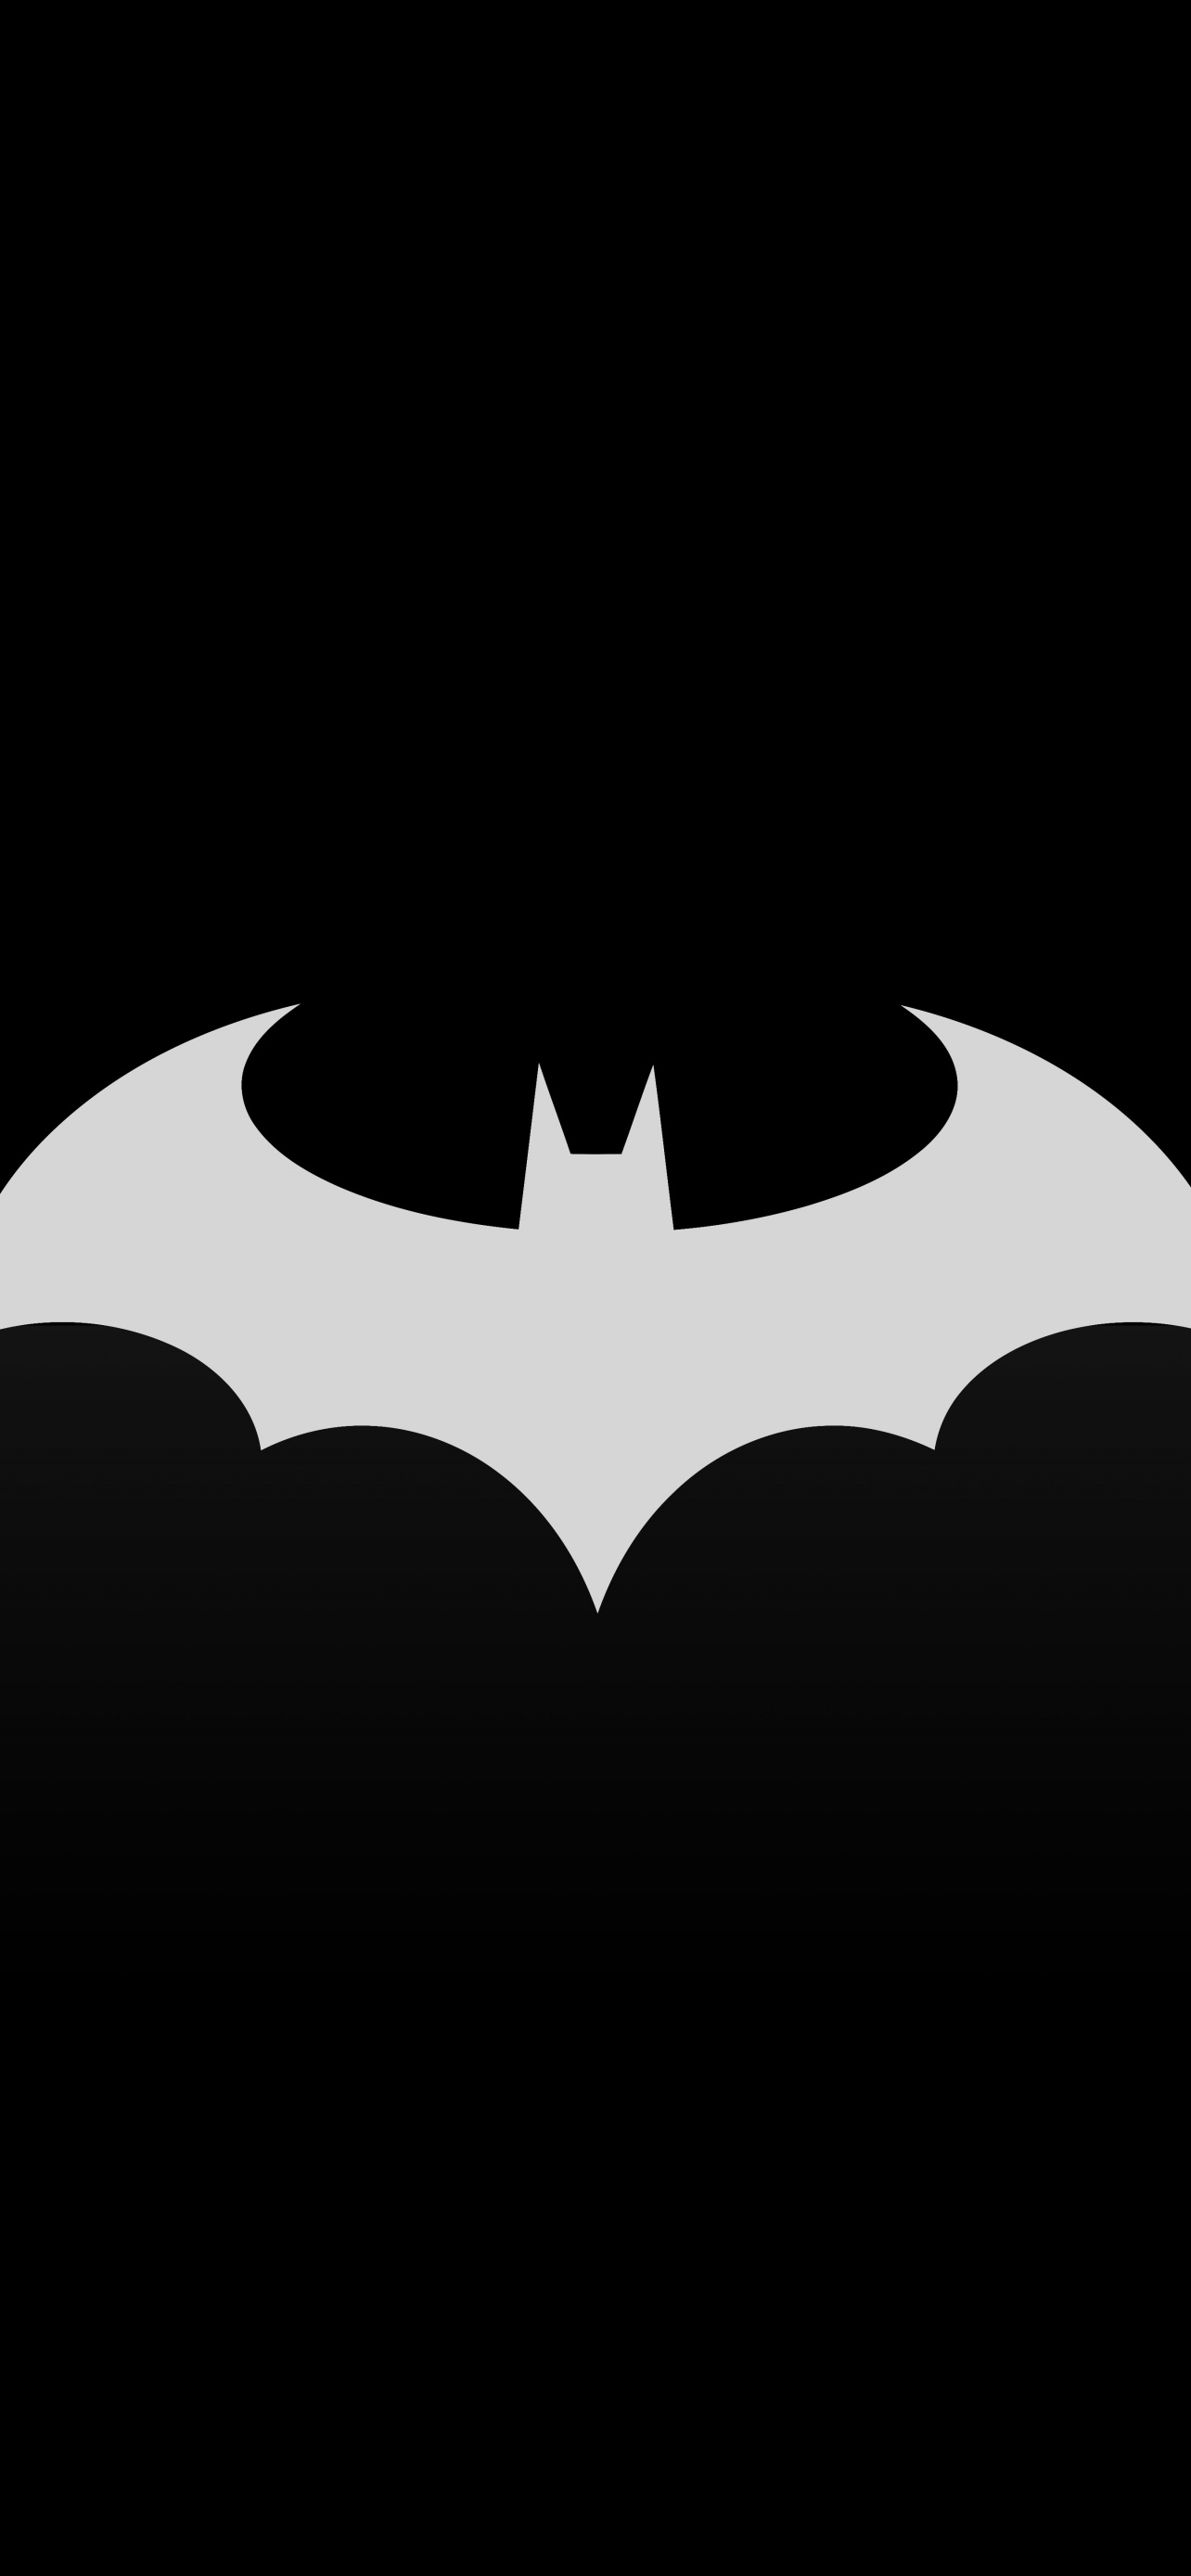 iPhone Batman Logo Wallpapers - Wallpaper Cave